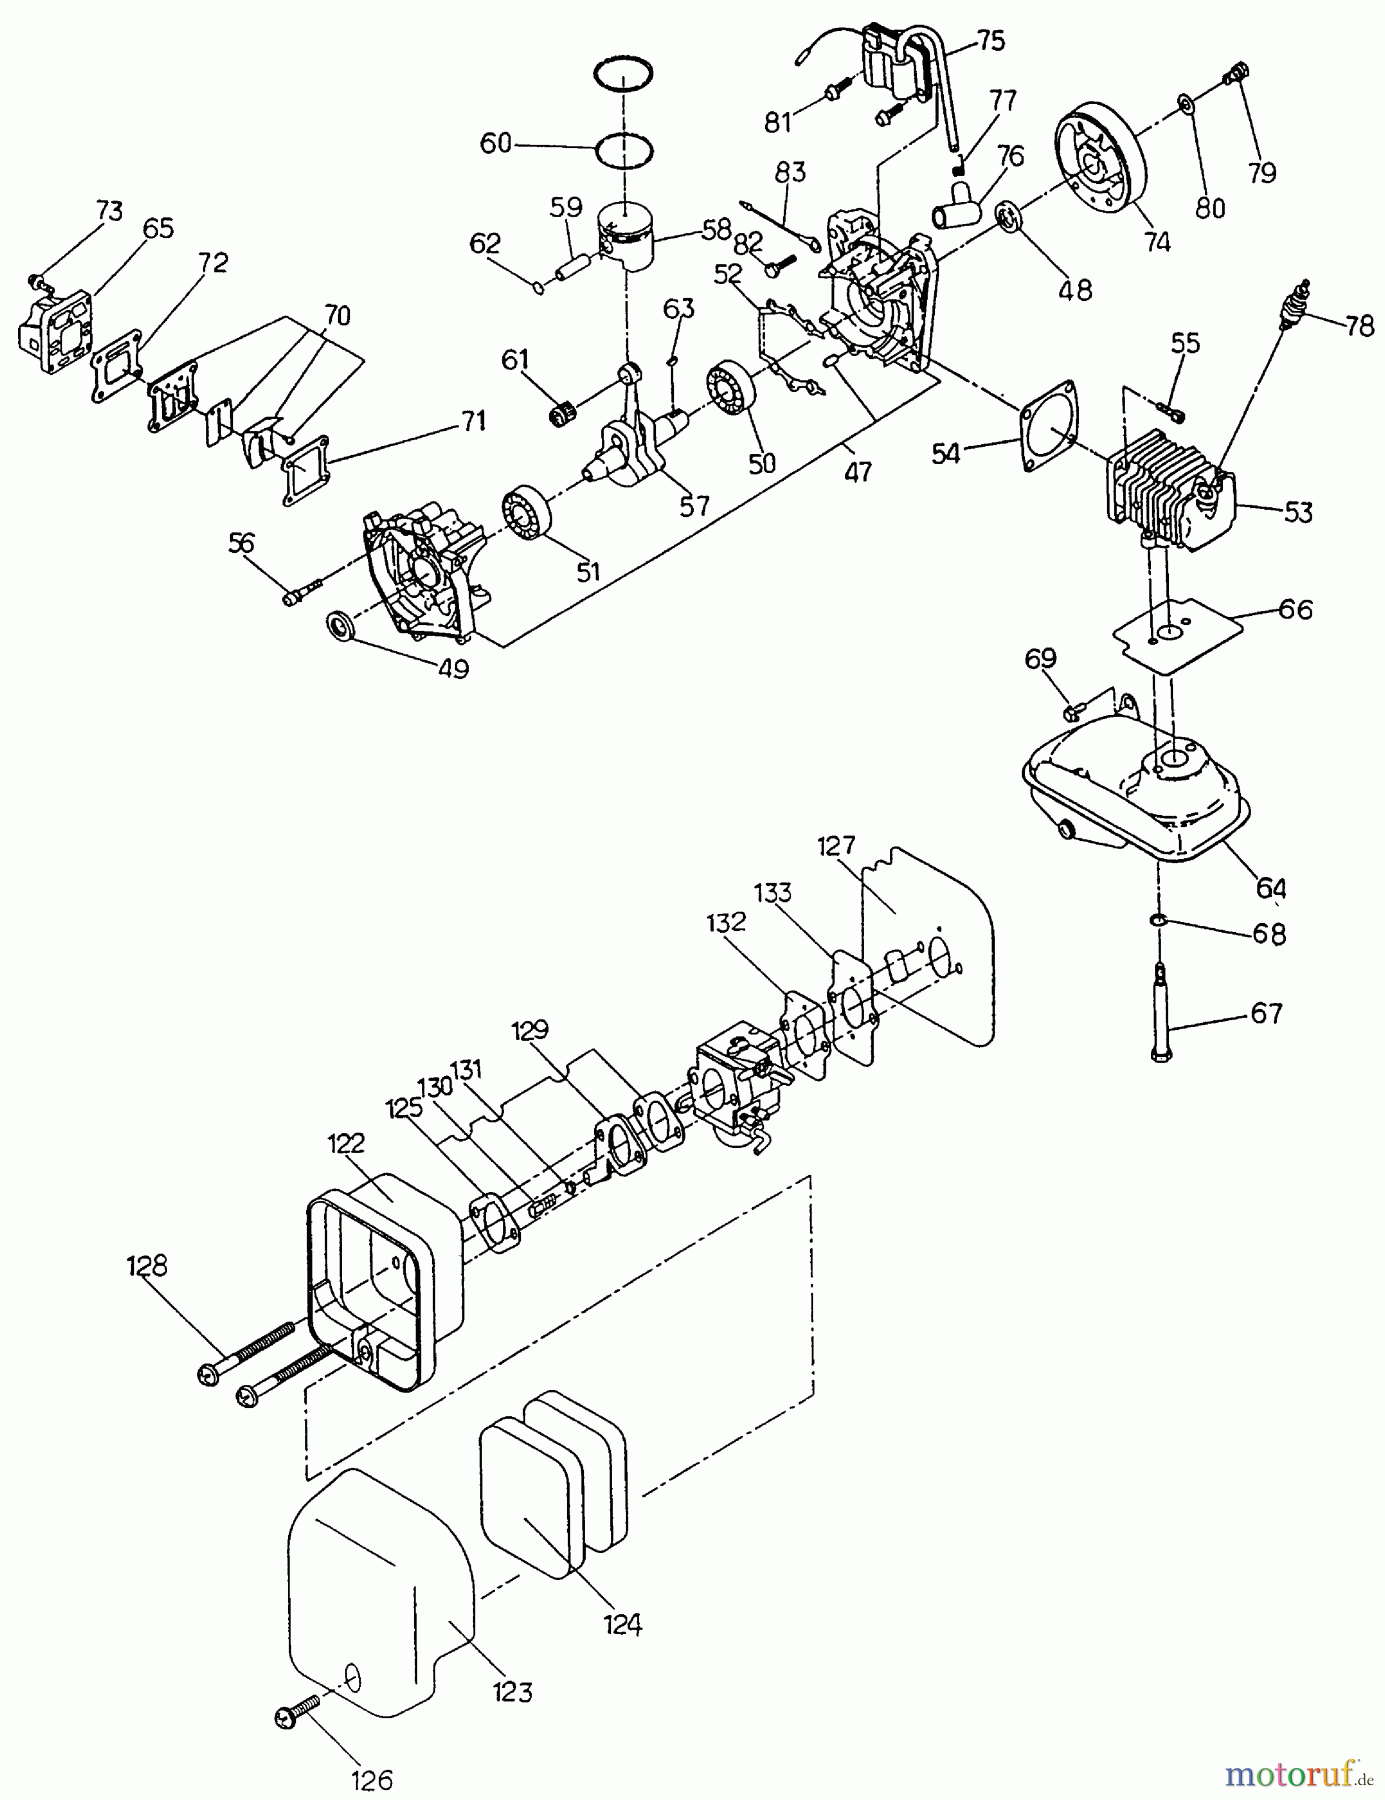  Dolmar Blasgeräte Benzin PB-500 R (USA) 2  Motor, Zündung, Schalldämpfer, Luftfilter